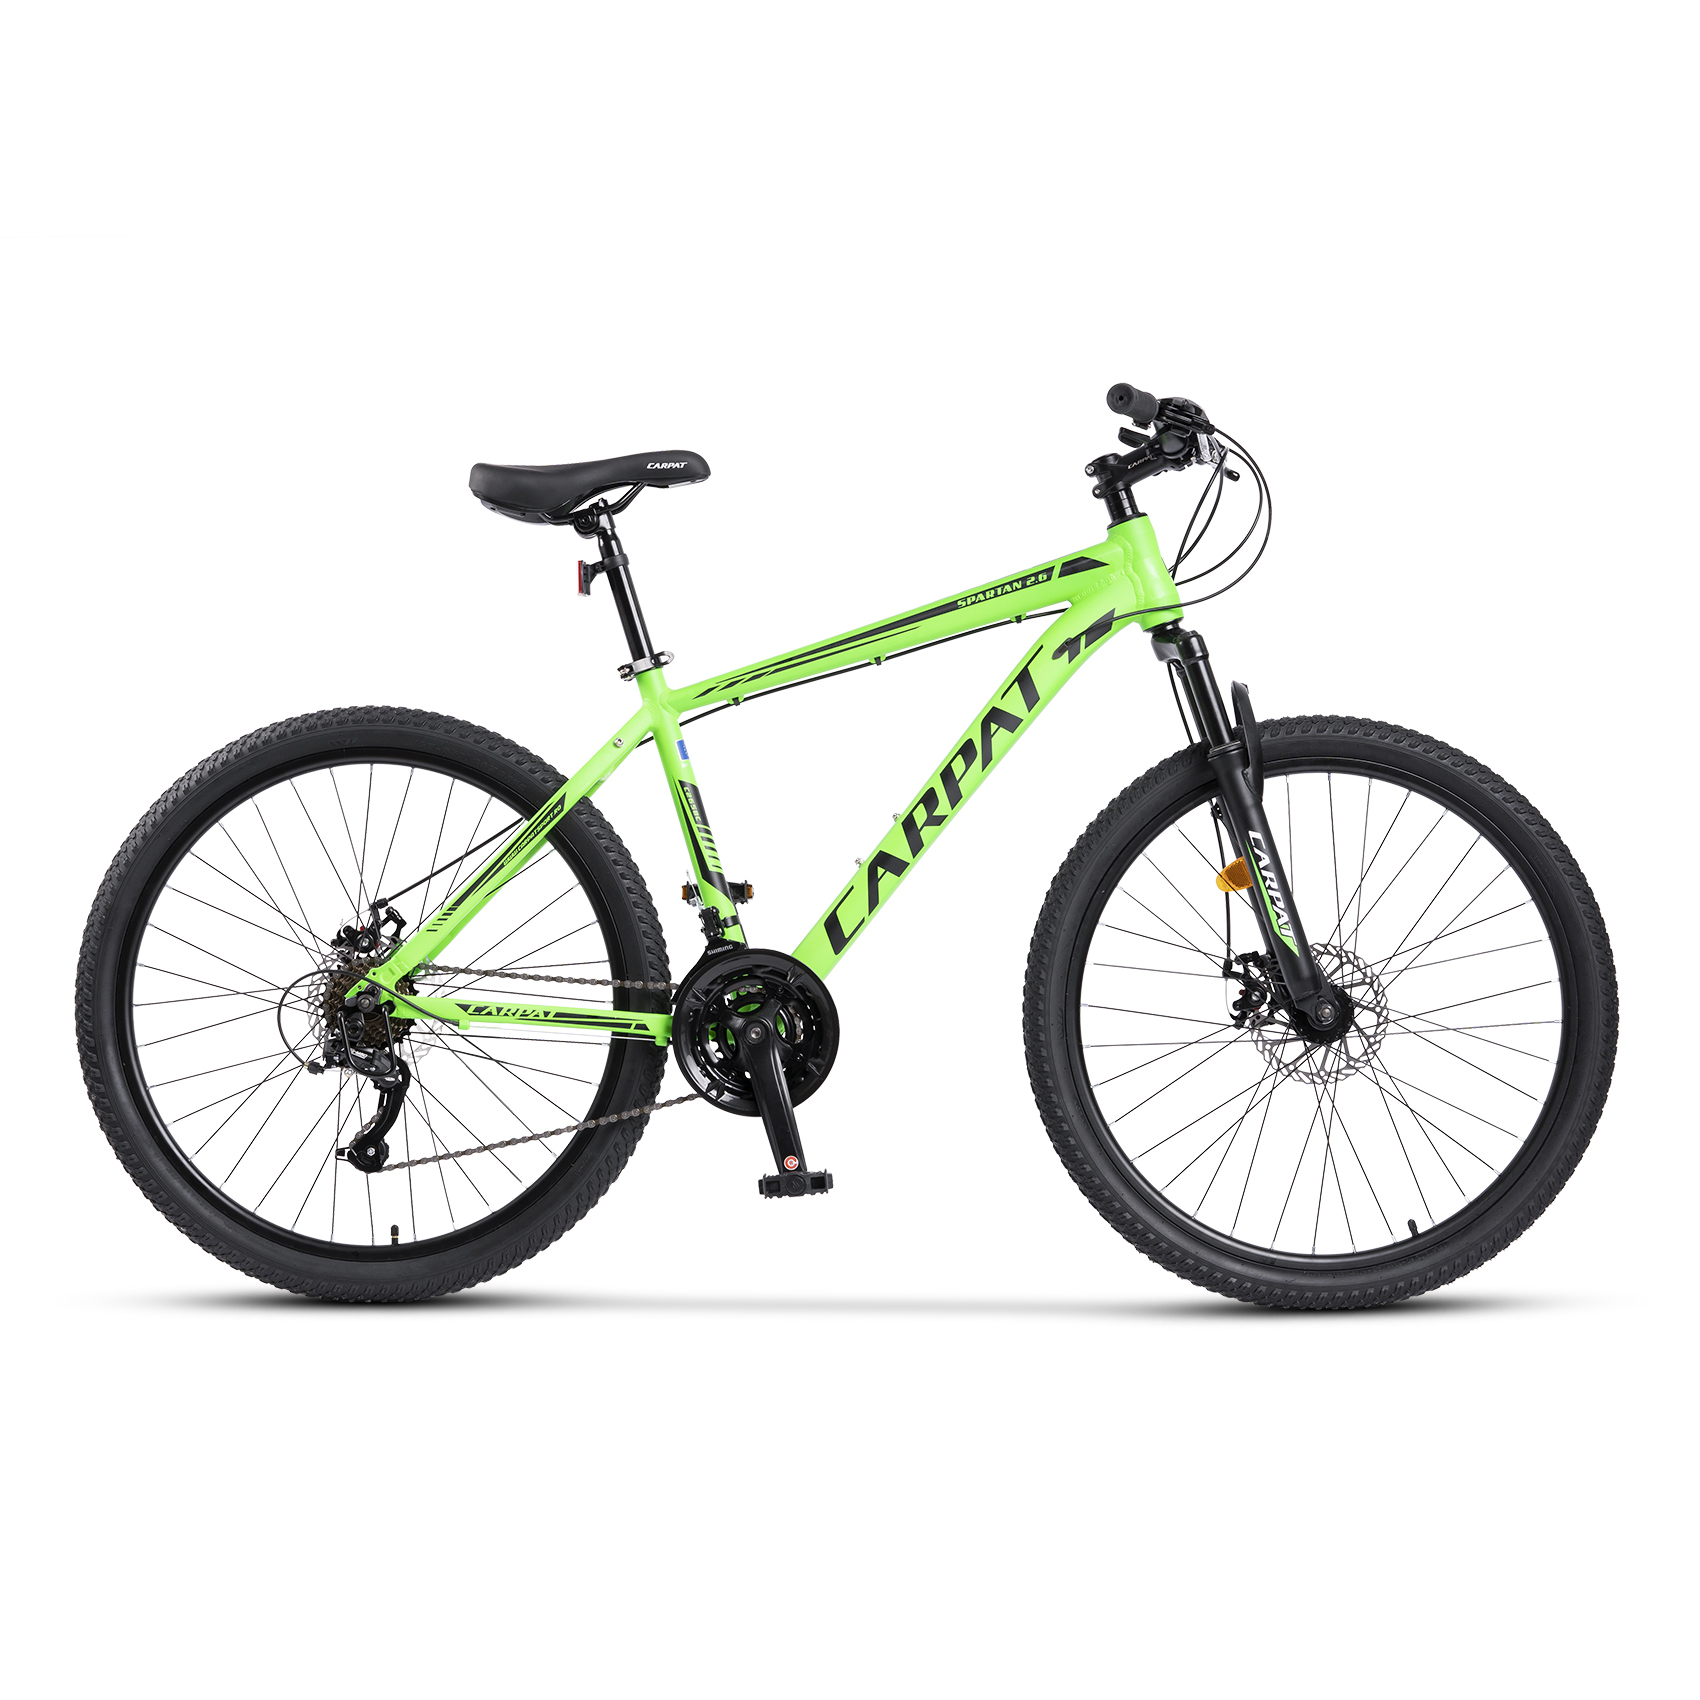 BICICLETE DE MUNTE - Bicicleta MTB-HT Carpat SPARTAN C26581A 26", Verde/Negru, https:carpatsport.ro